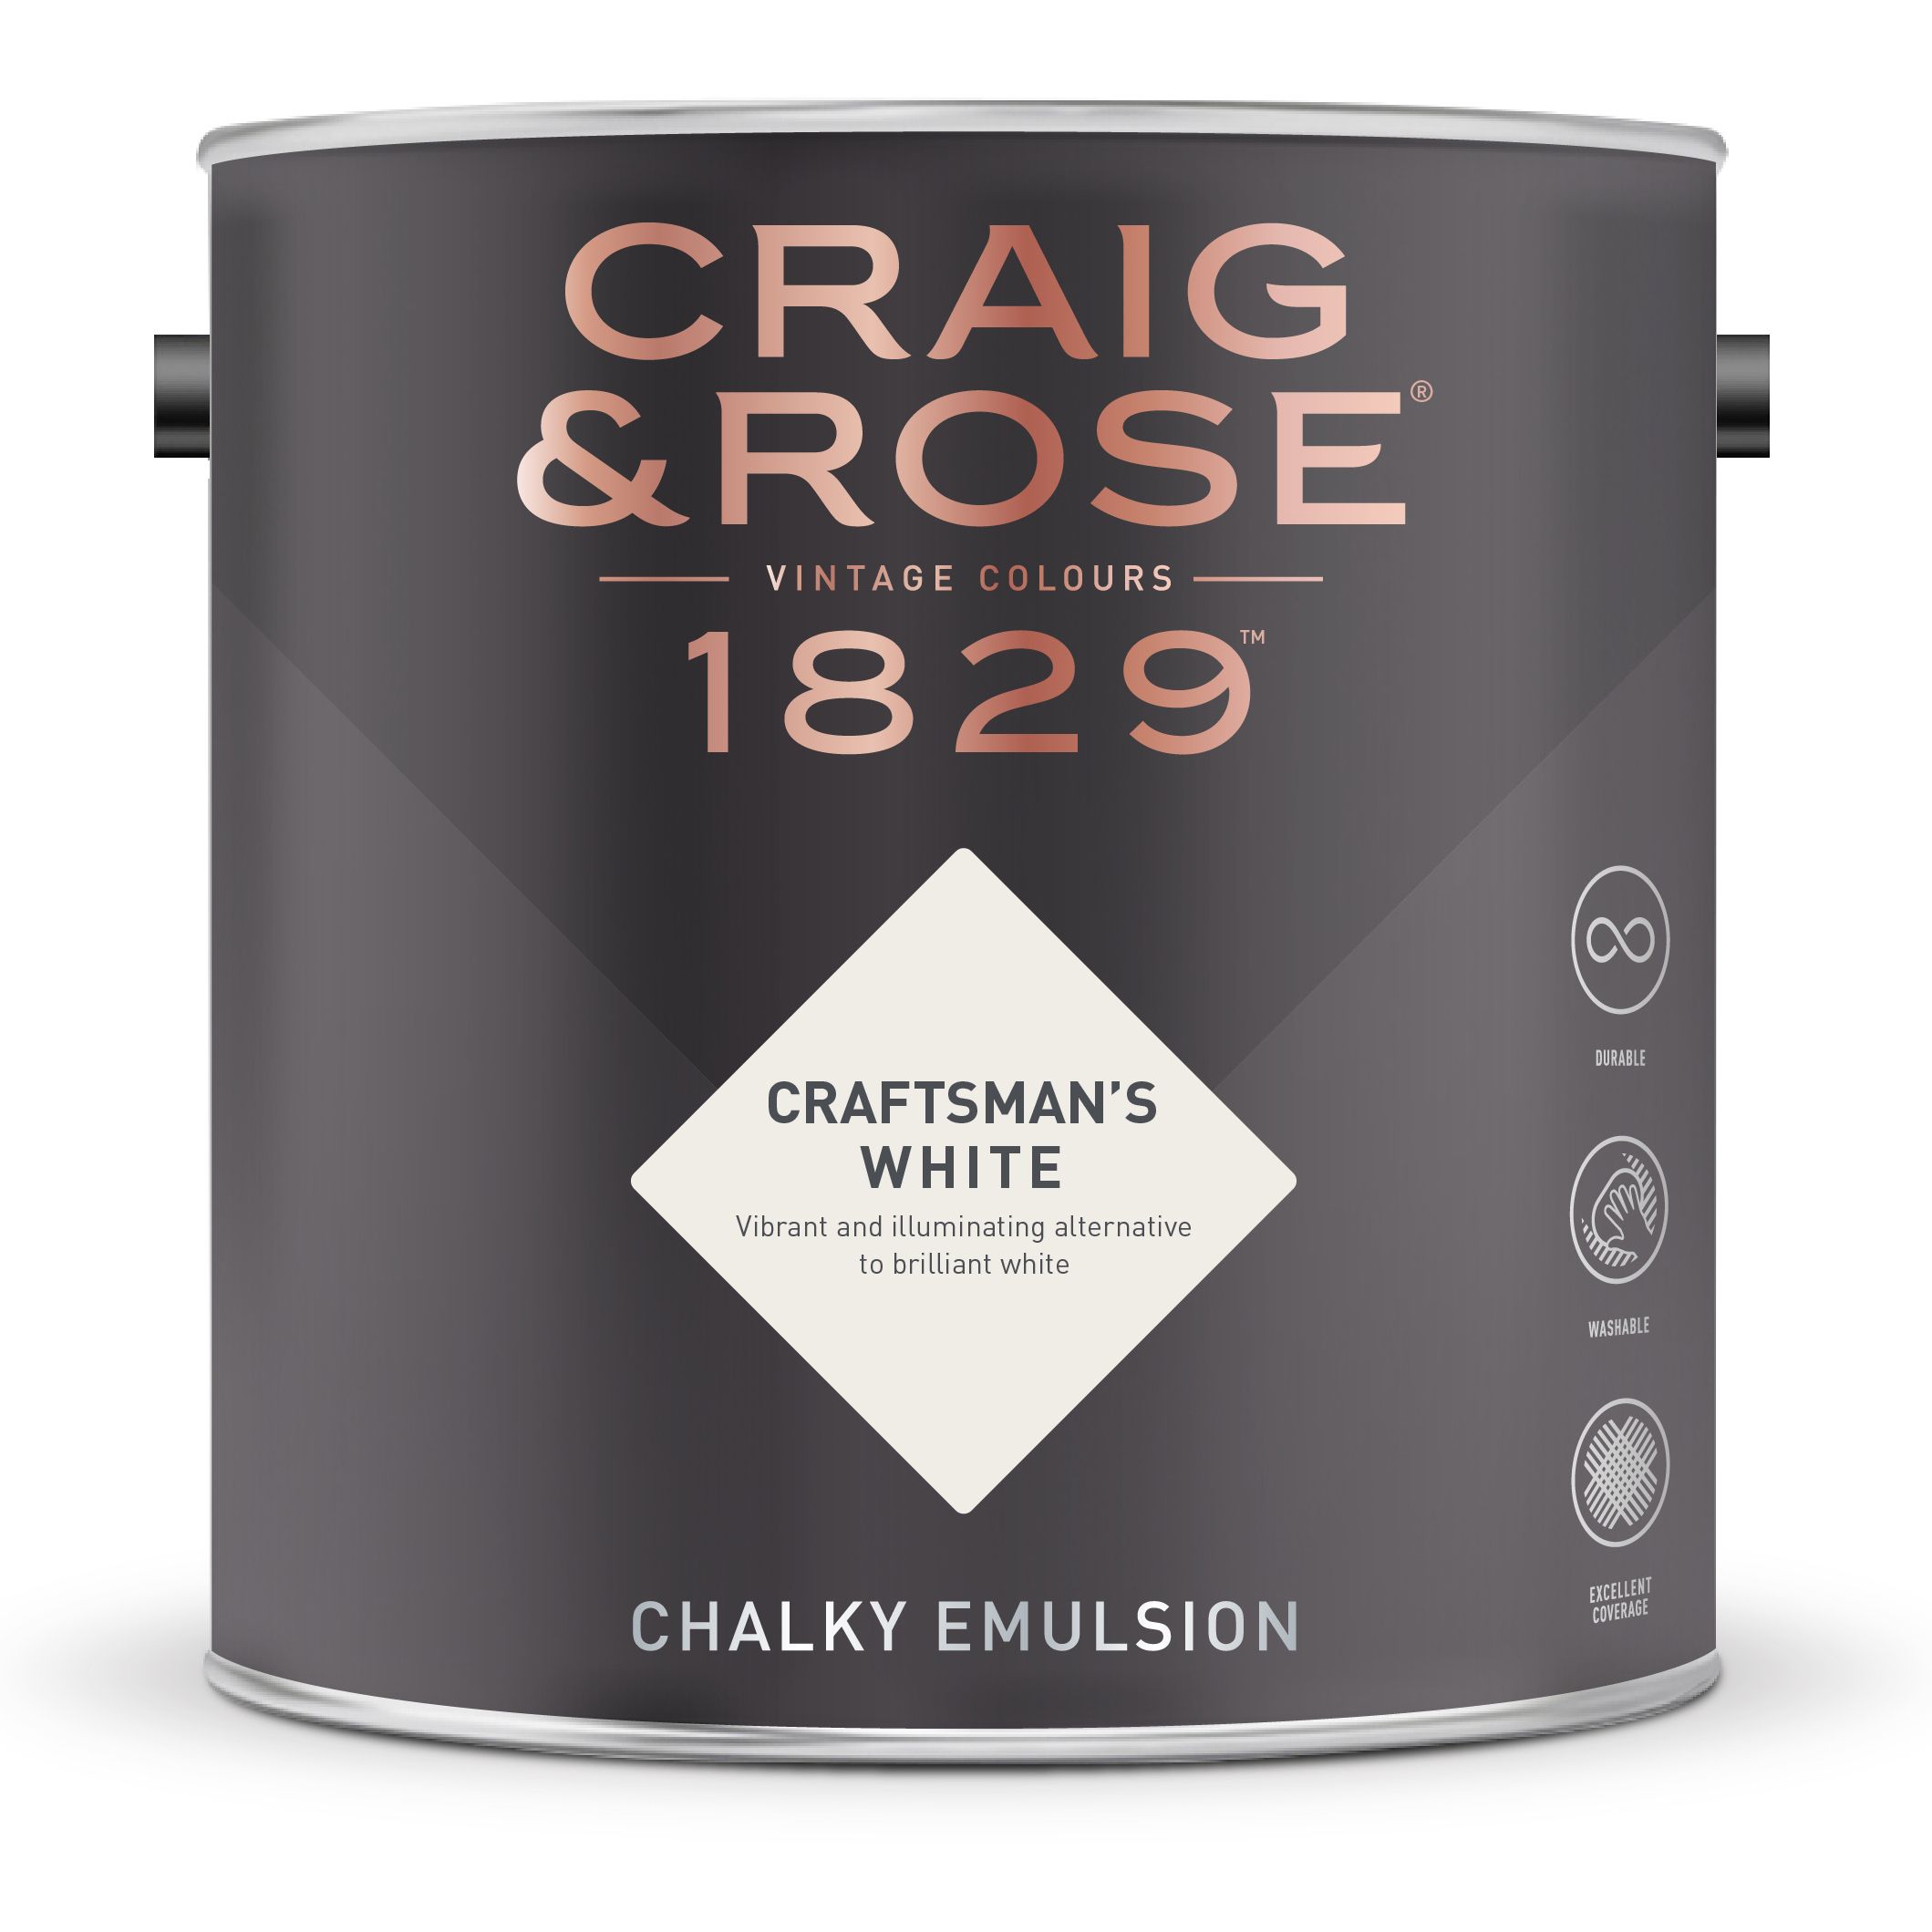 Craig & Rose 1829 Craftsman's White Chalky Emulsion paint, 2.5L